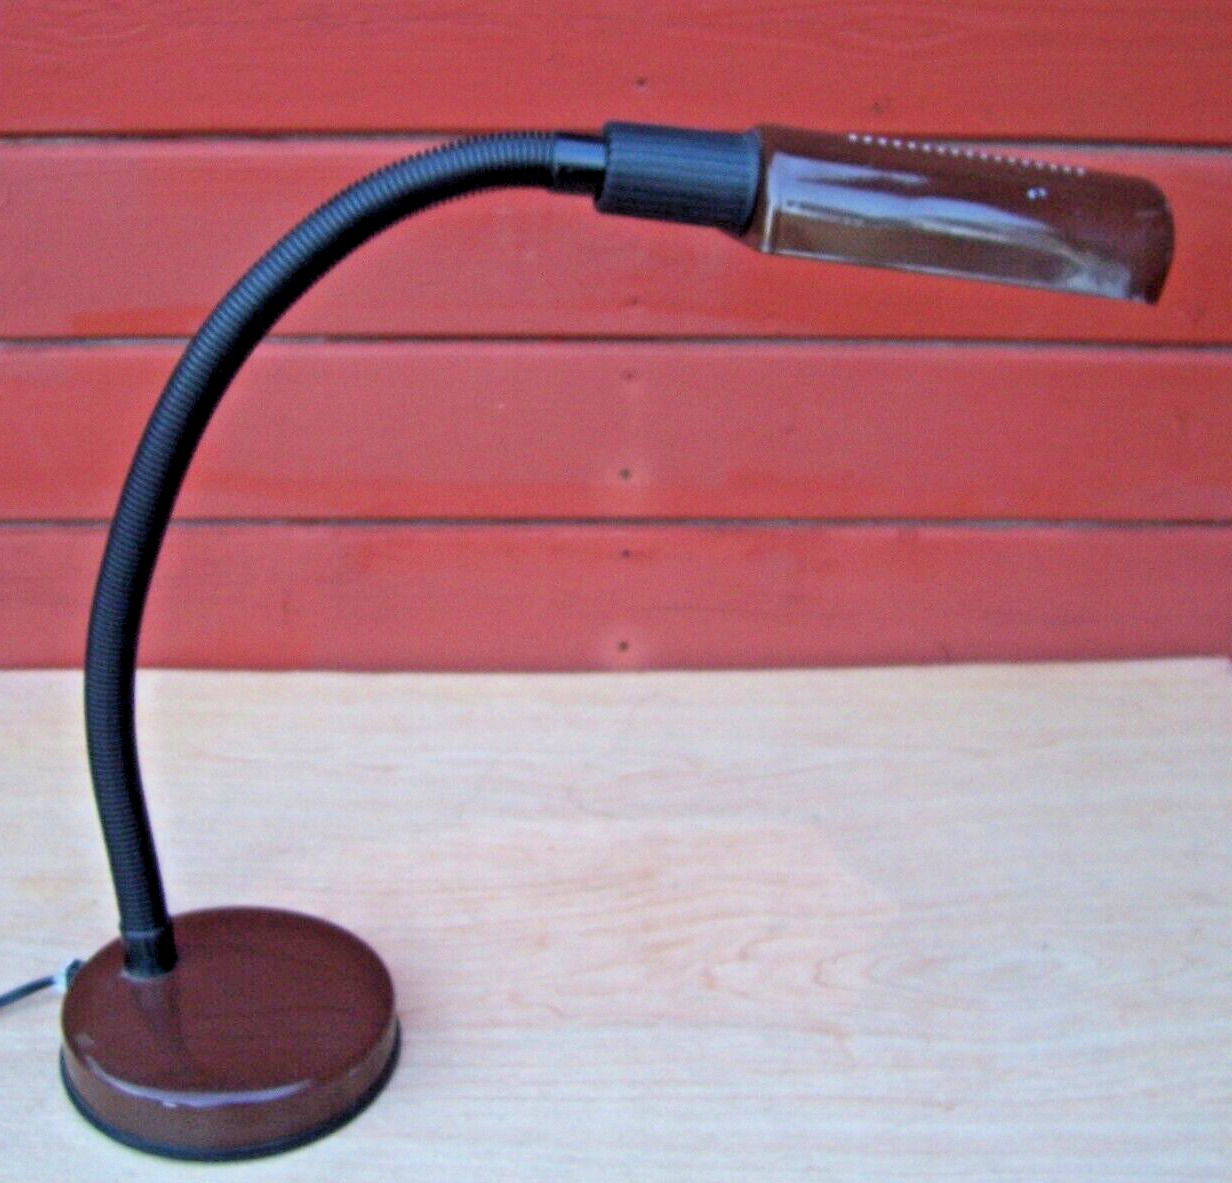 Vintage VENETA LUMI Goose Neck Desk Lamp  Made in ITALY Brown and Black